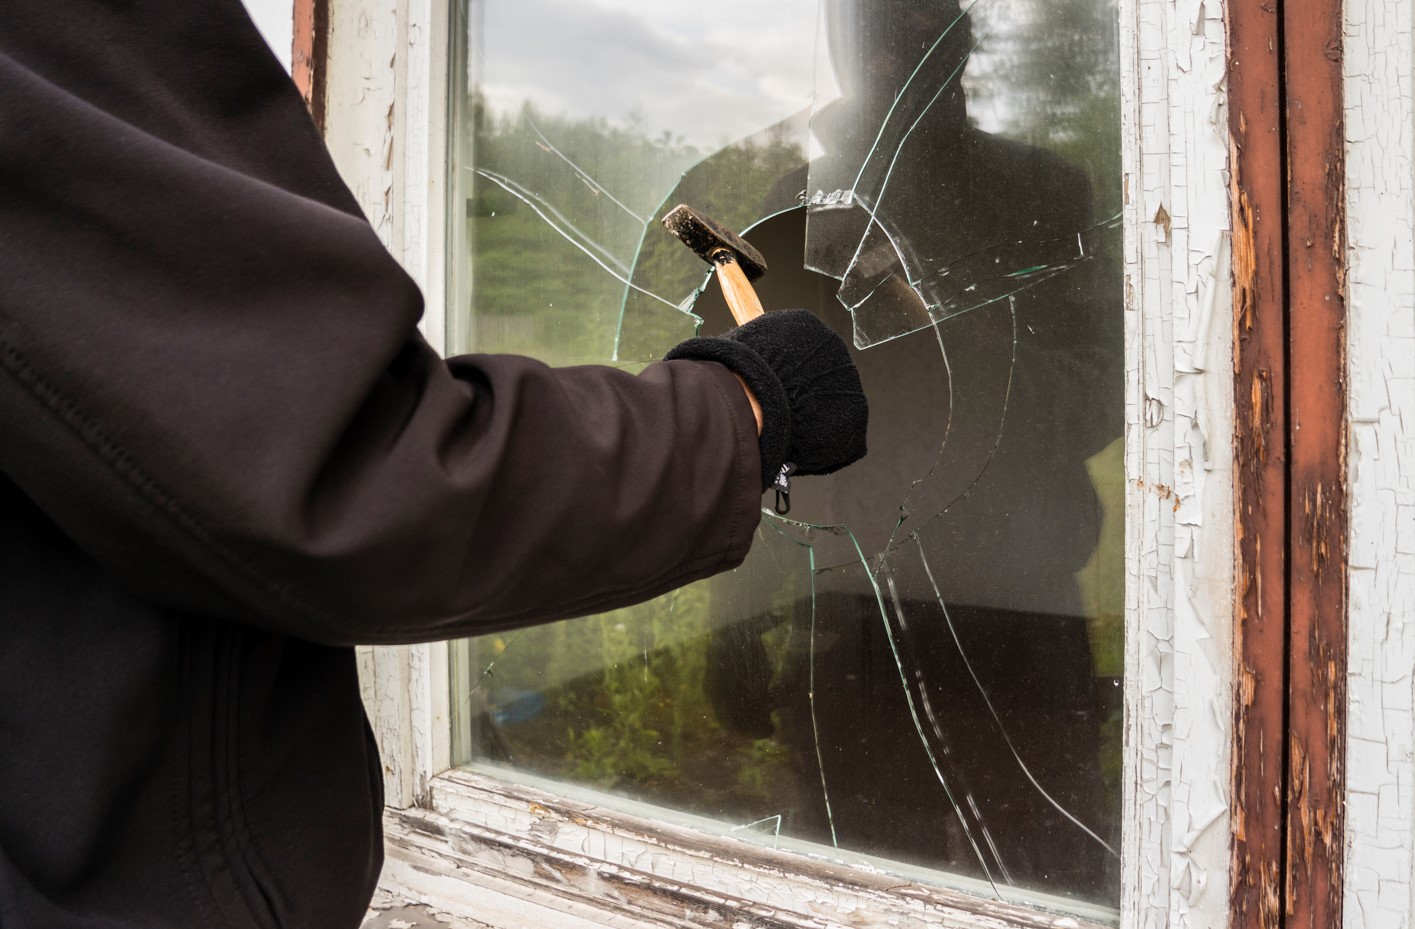 person with hammer breaking window wearing black